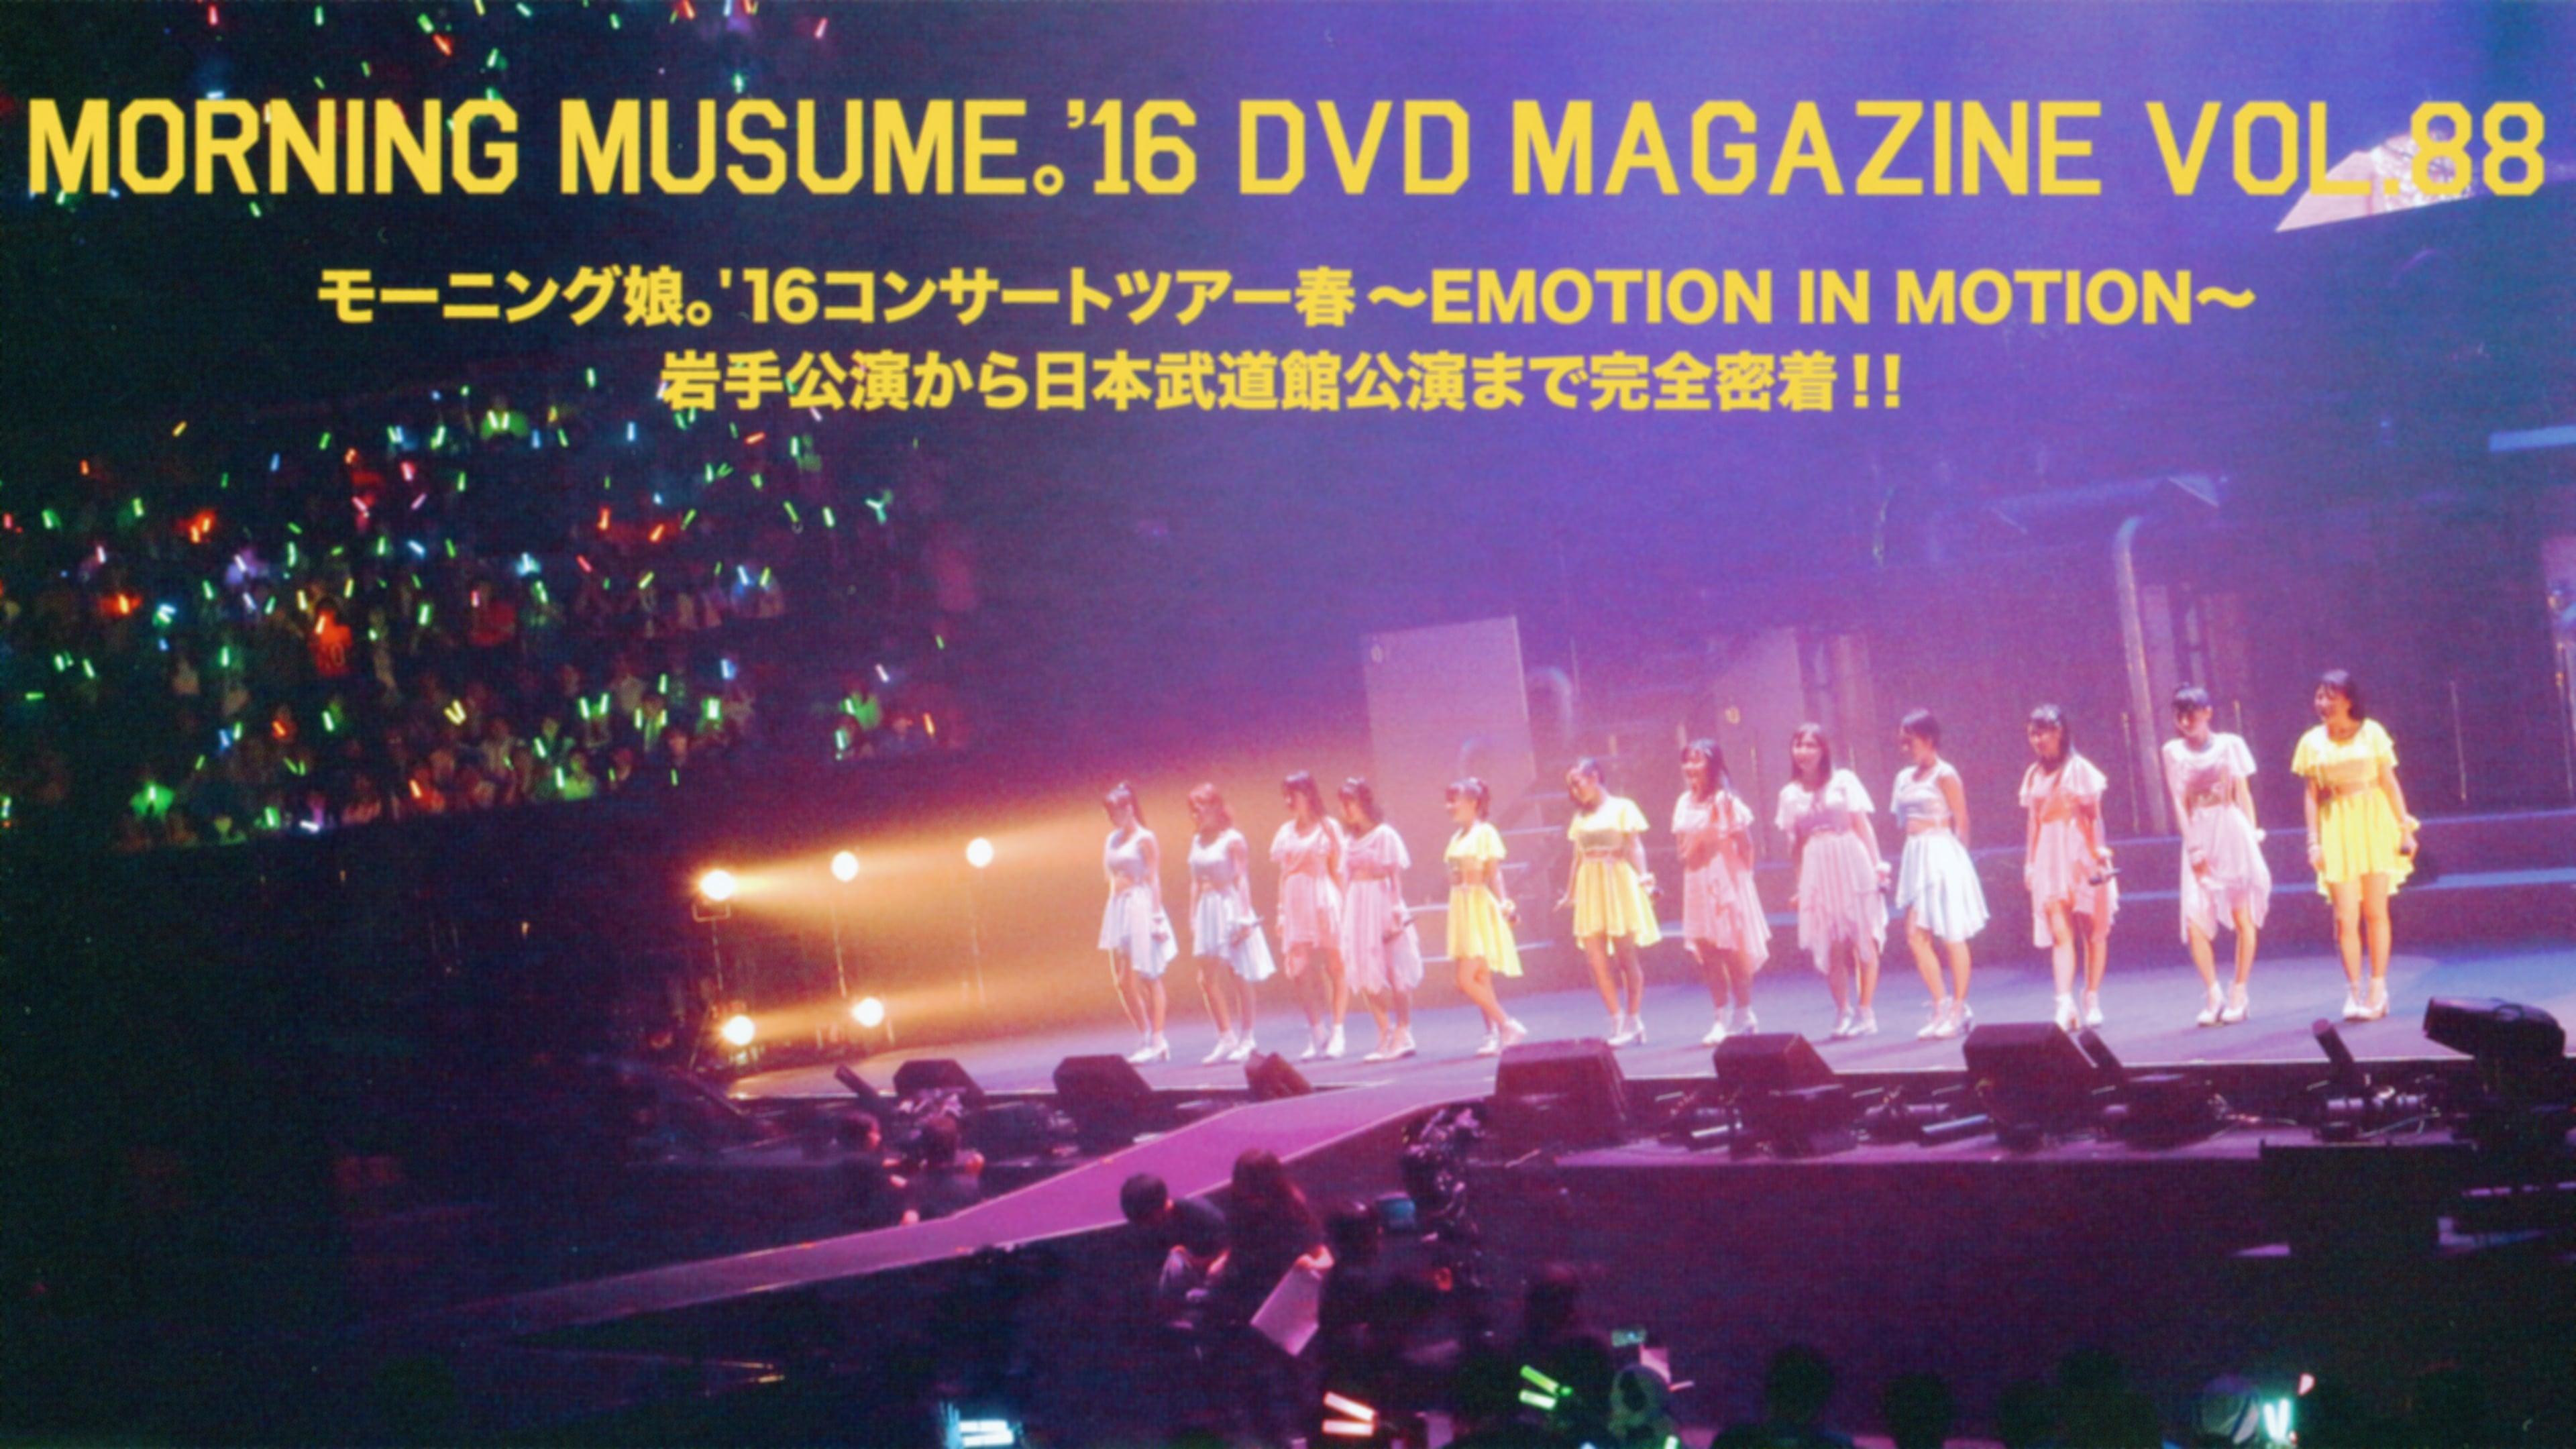 Morning Musume.'16 DVD Magazine Vol.88 backdrop